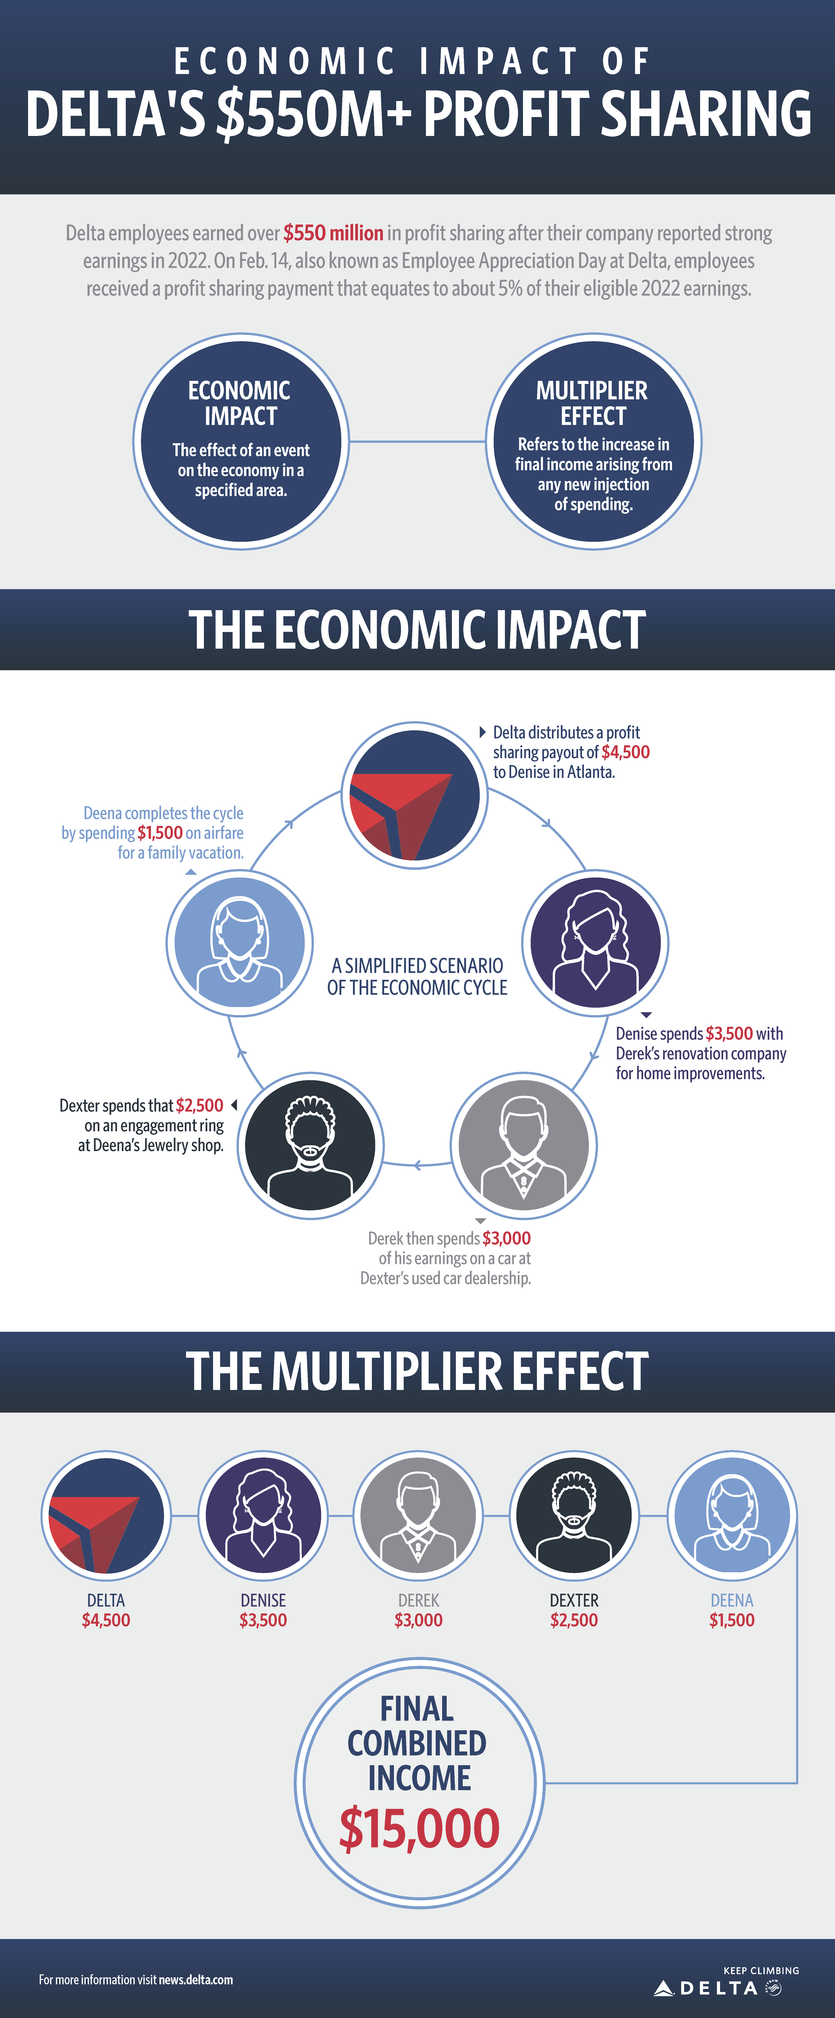 Economic impact of Delta's $550M+ profit sharing